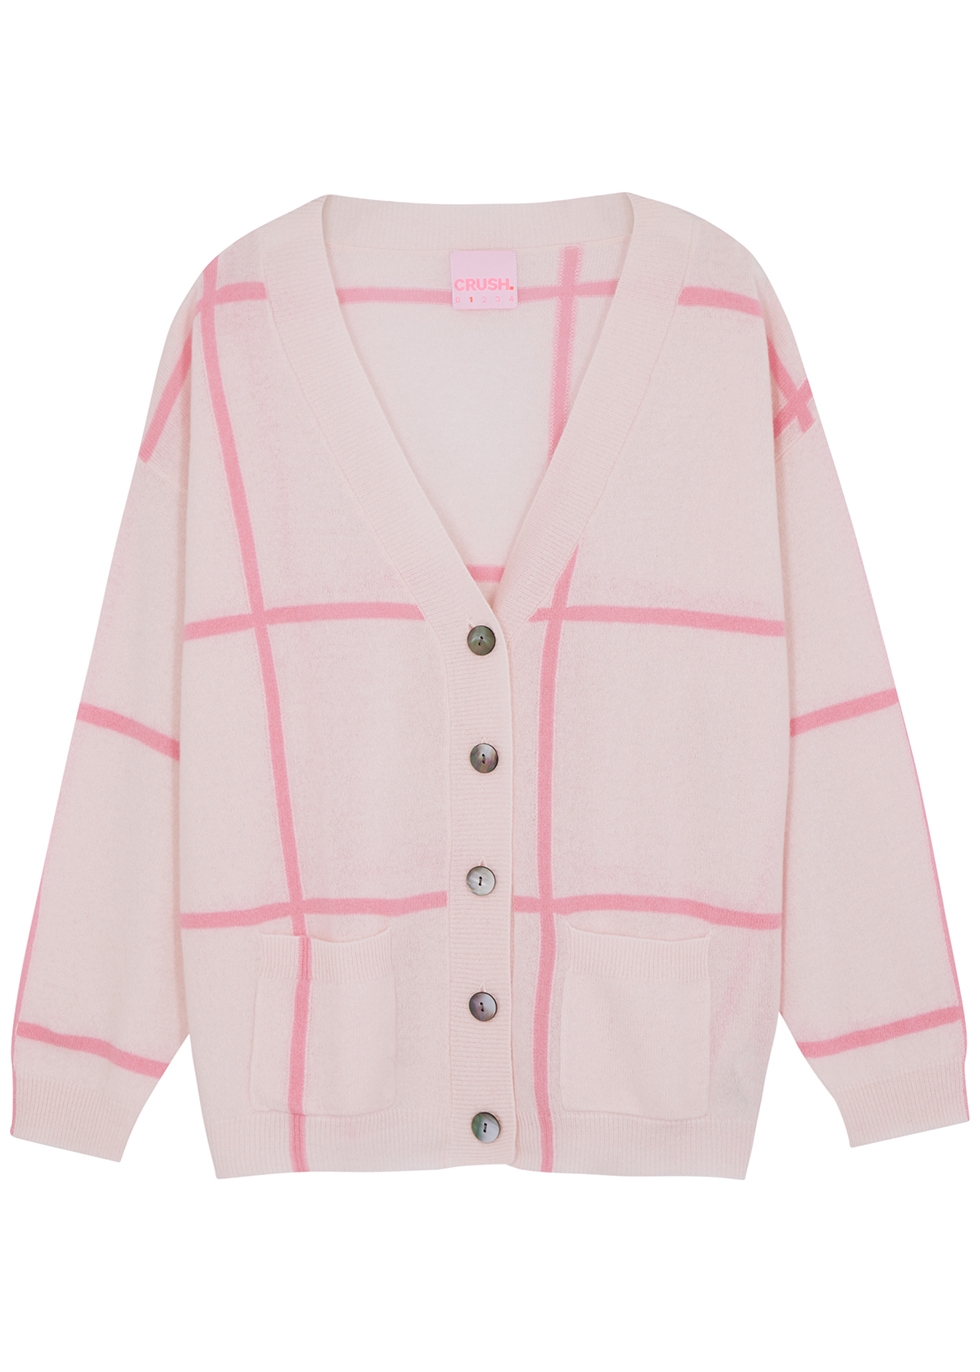 CRUSH CASHMERE Canggu pink checked cashmere cardigan - Harvey Nichols